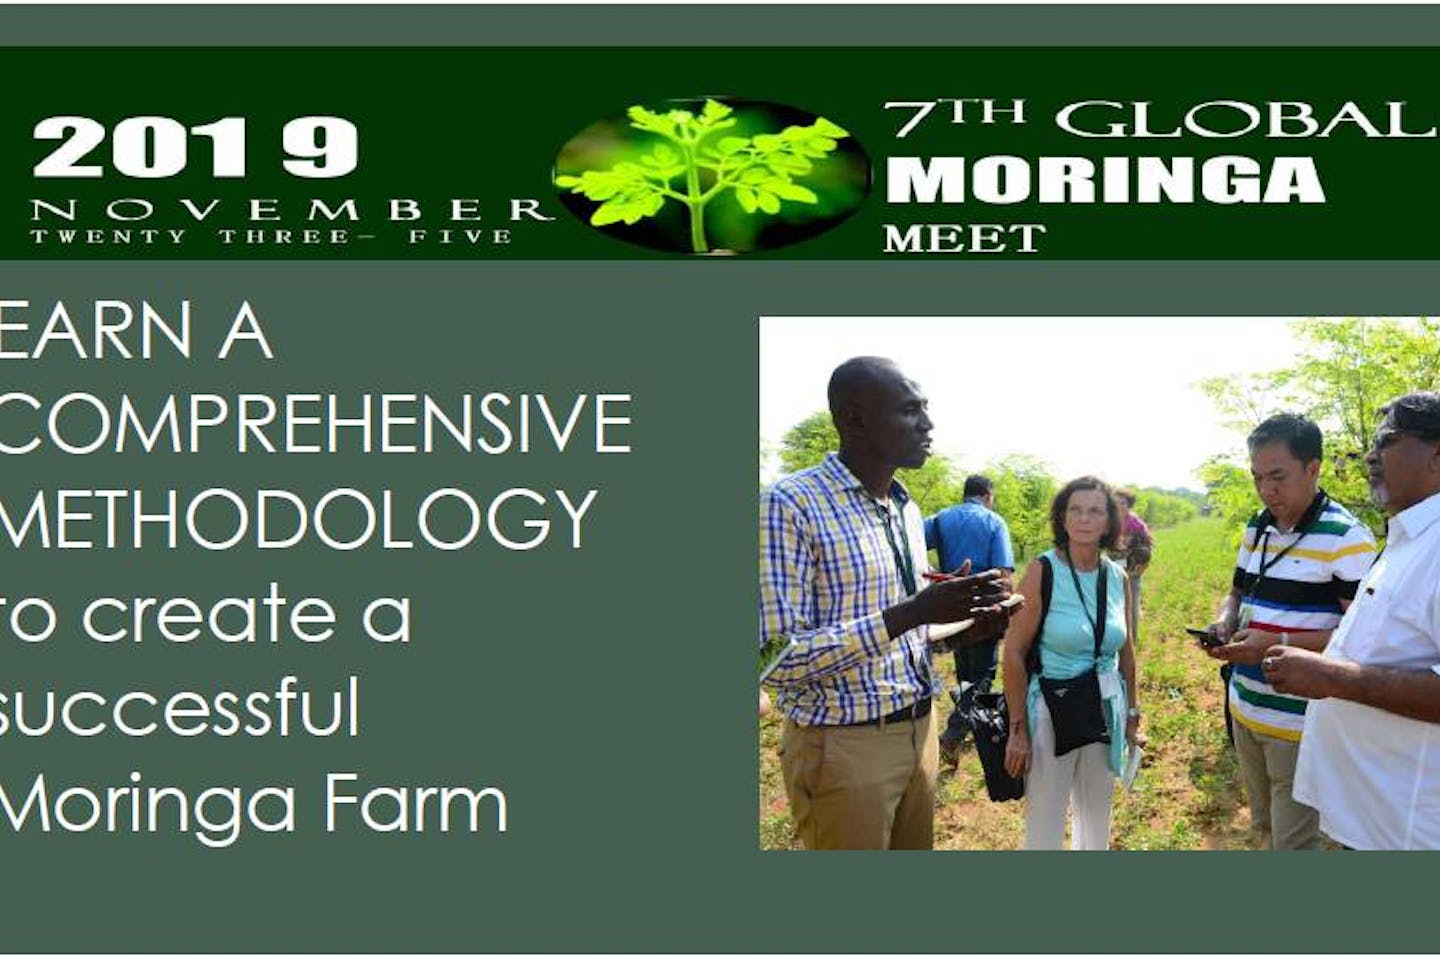 Global Moringa Meet 2019 demonstrates advancements in production & application of moringa